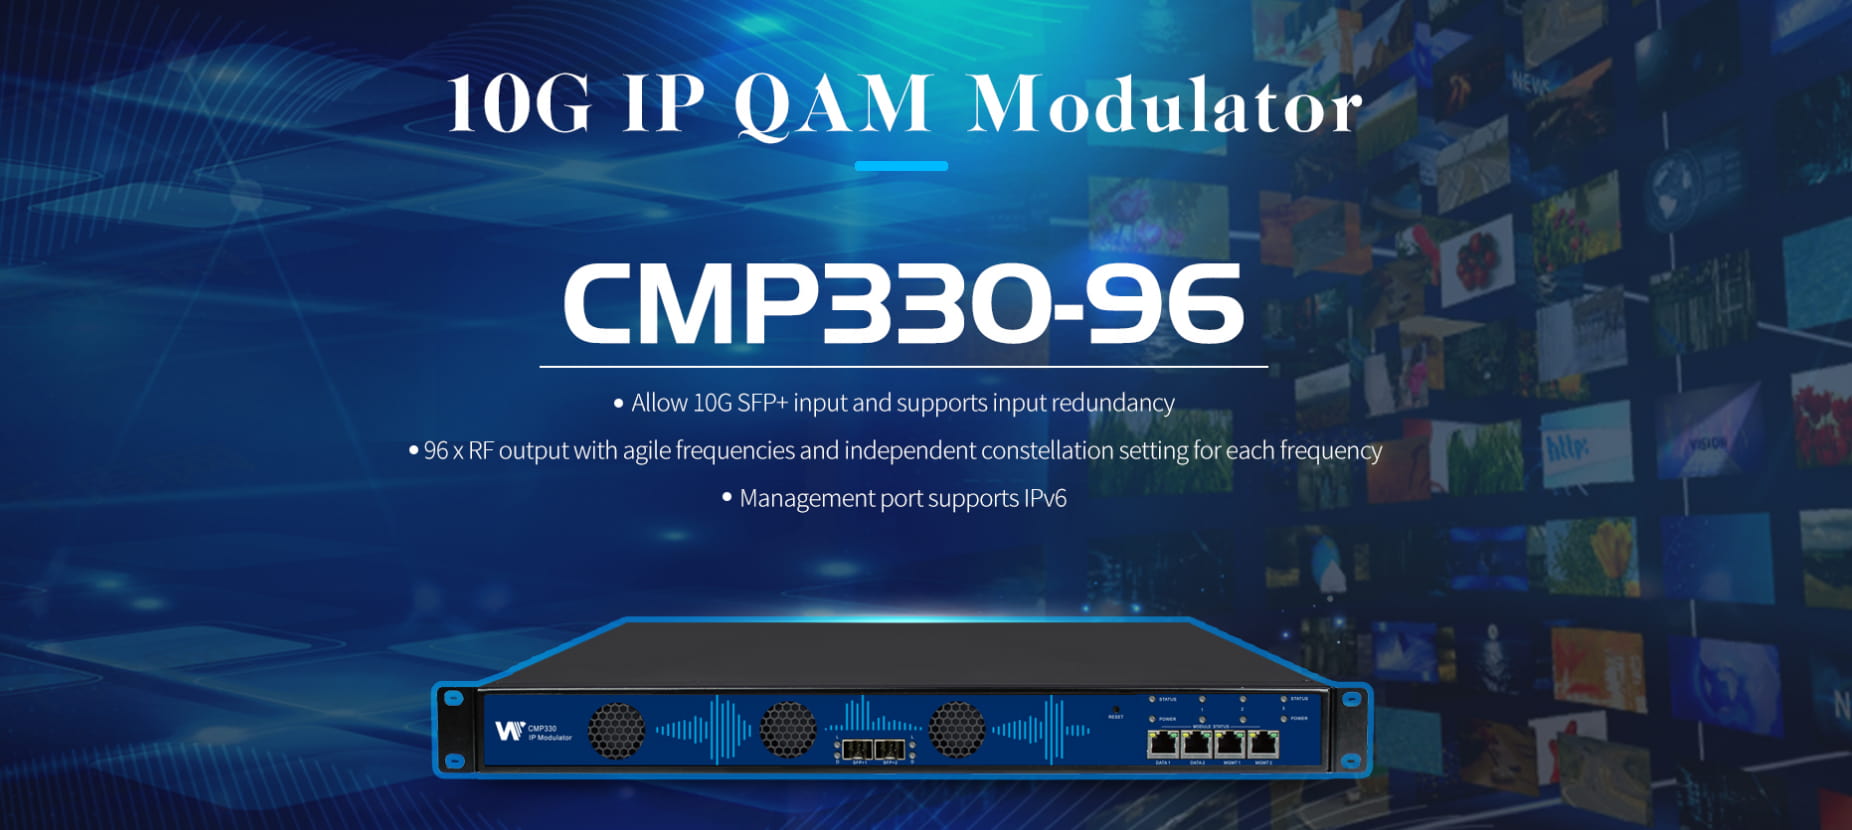 Modulatore QAM 10G Edge